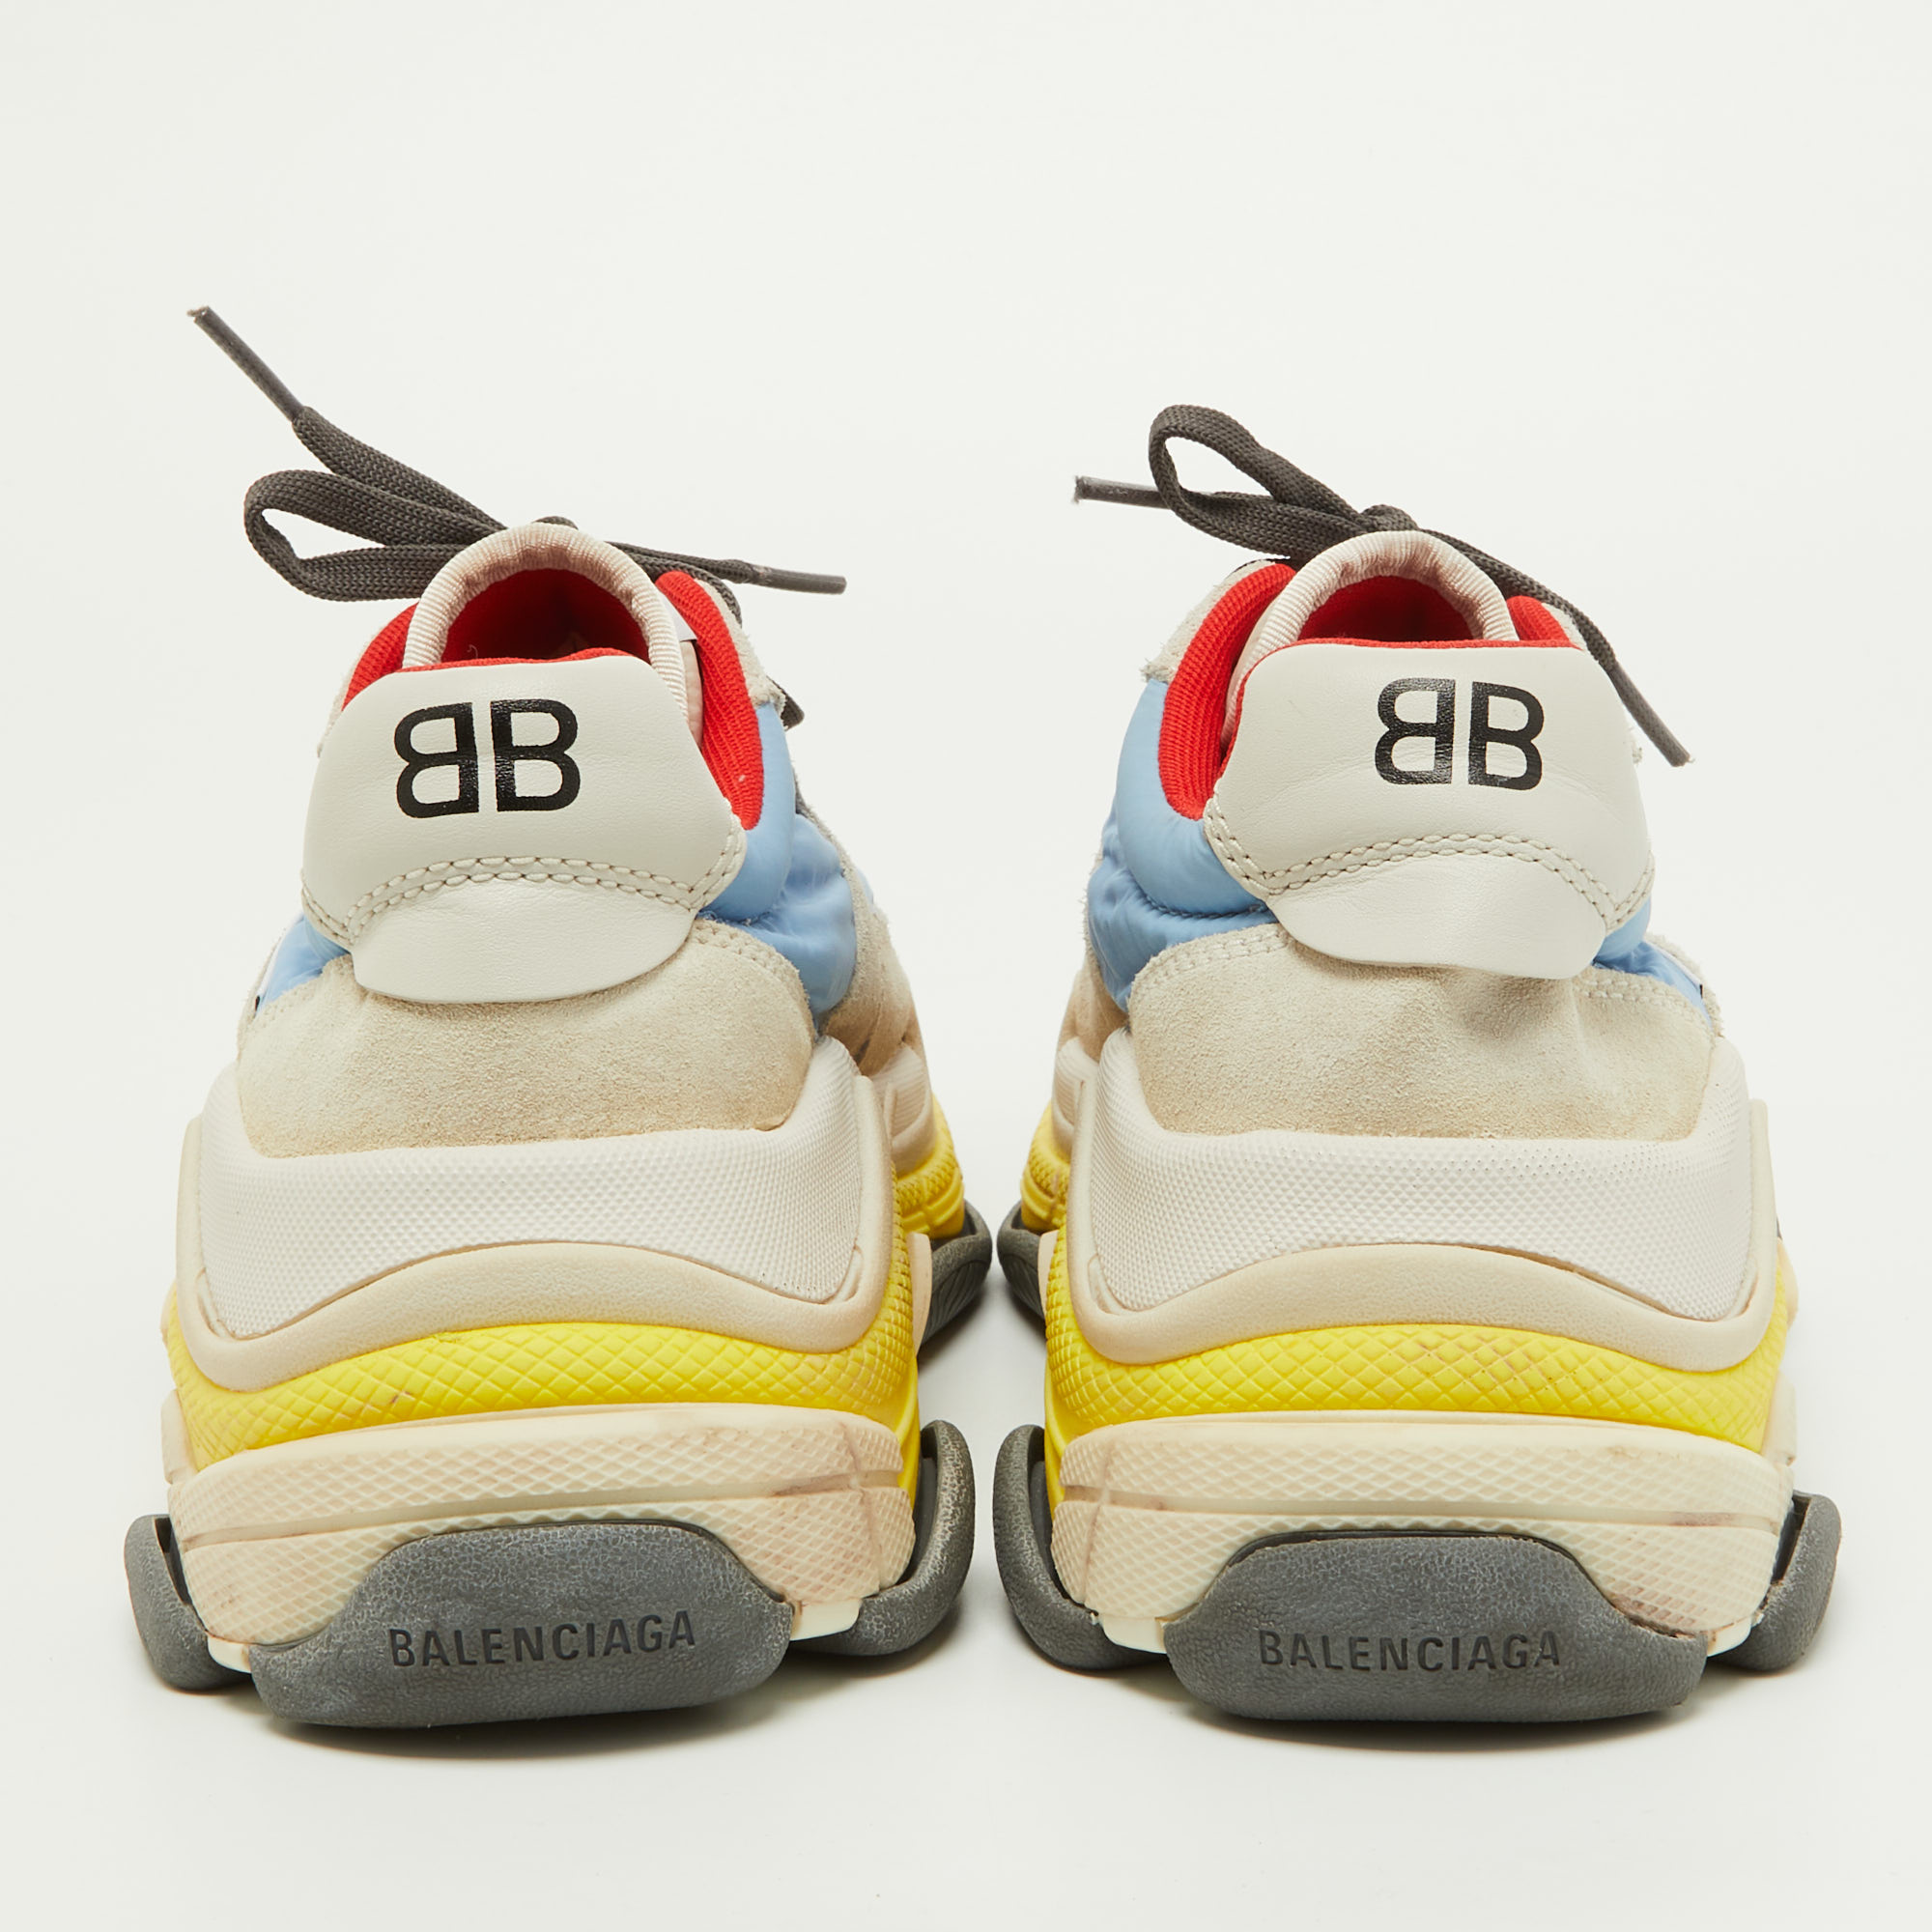 Balenciaga Multicolor Suede And Nylon Triple S Sneakers Size 39